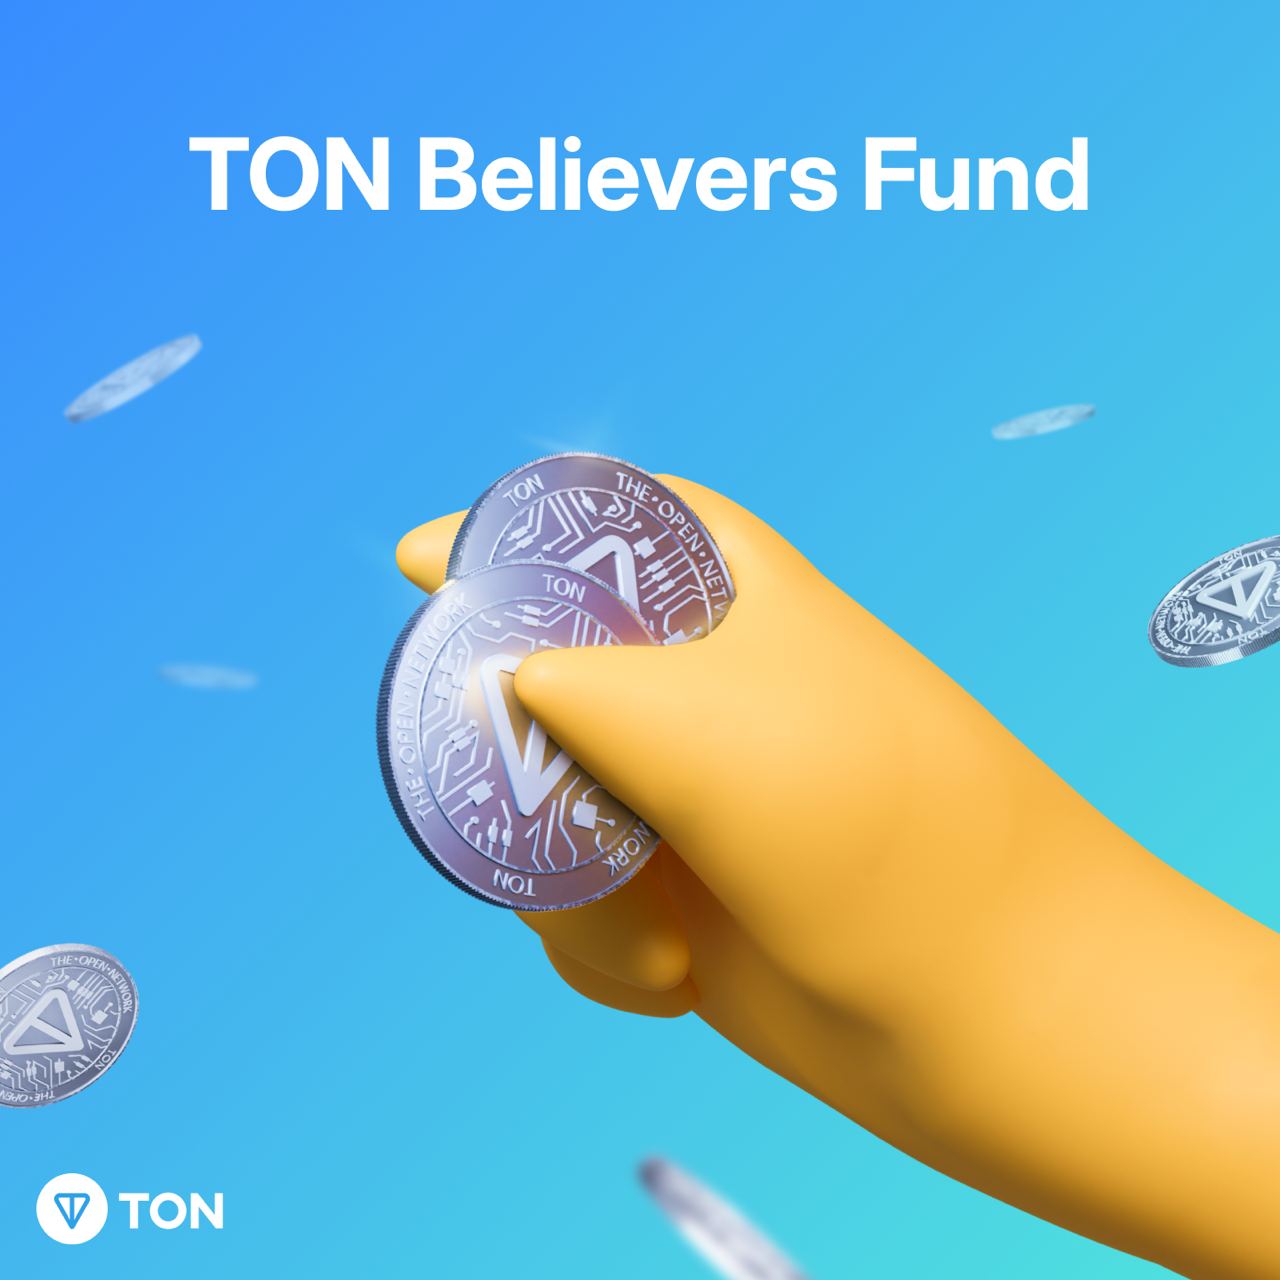 TONCOIN. TONCOIN narxi. TONCOIN Wallet 50 ton. TONCOIN suniy Intelekt. Ton foundation